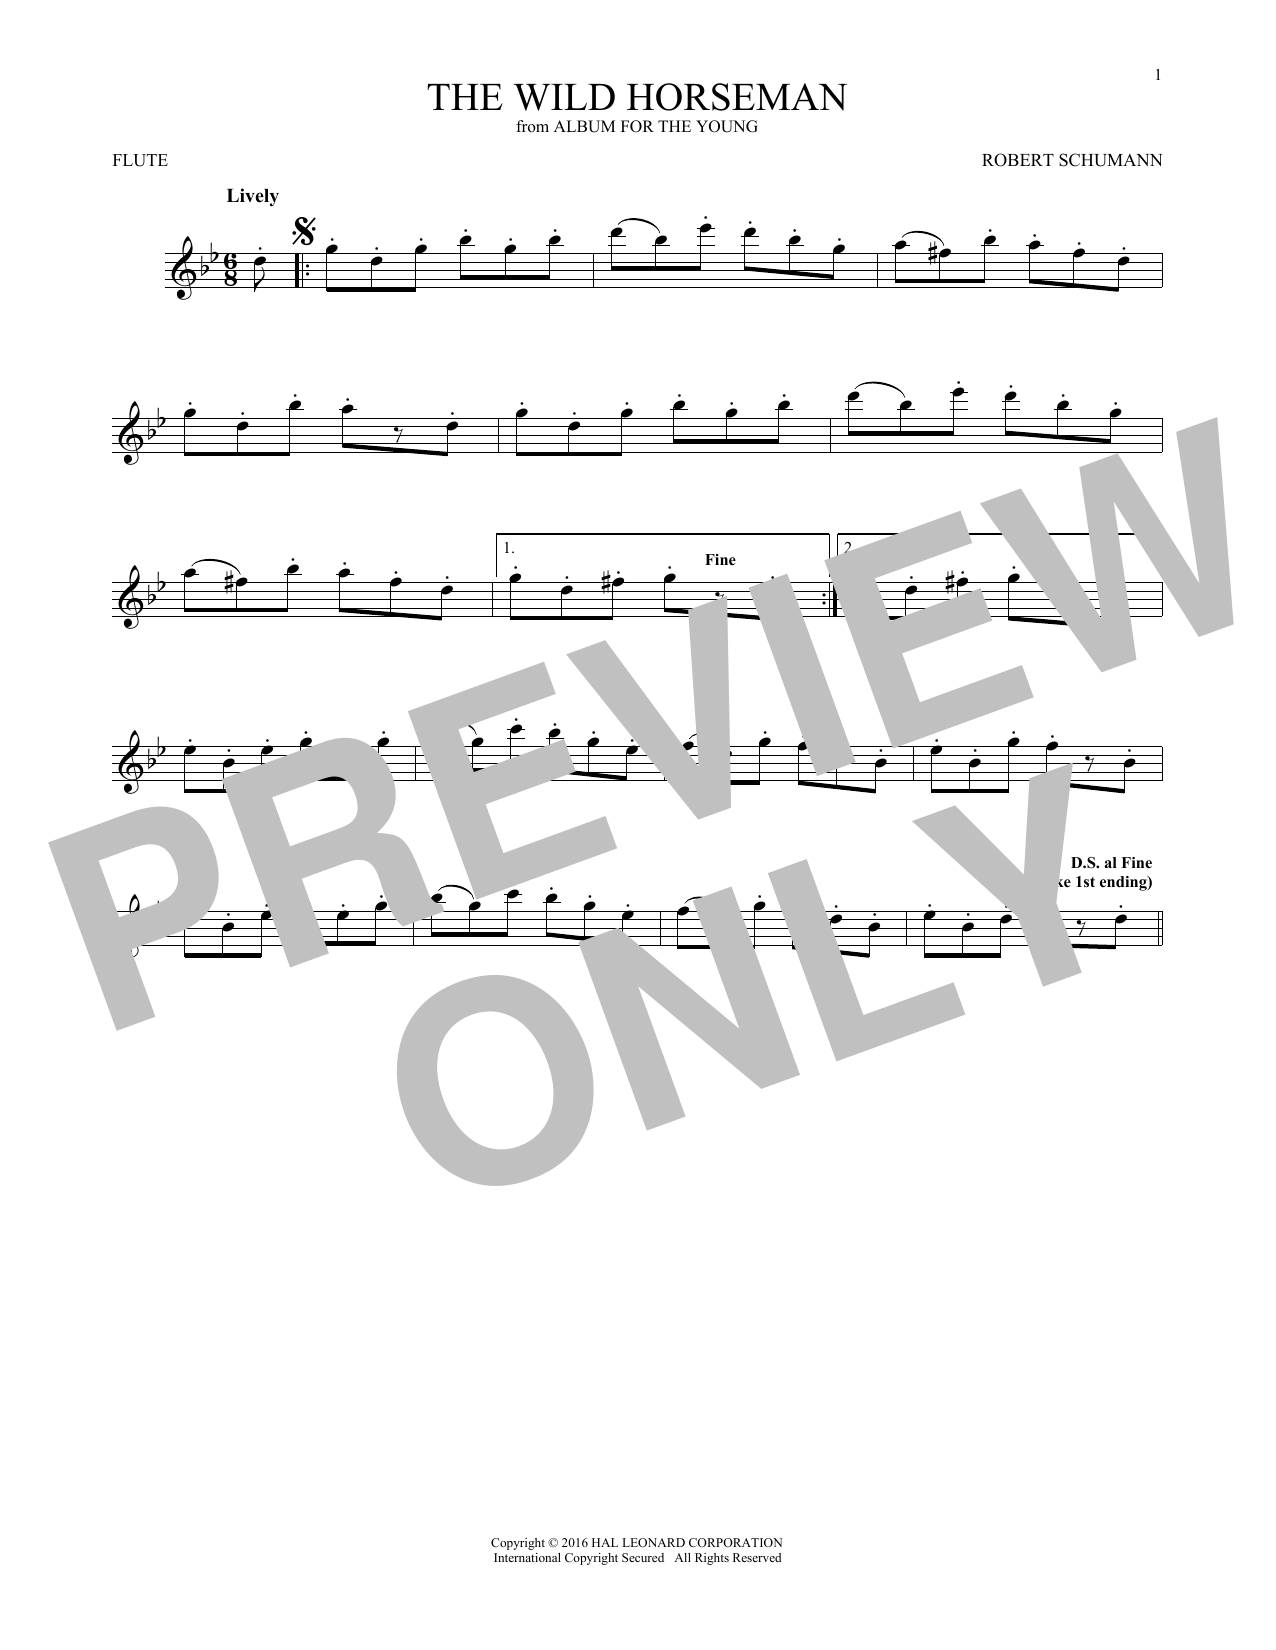 Robert Schumann The Wild Horseman (Wilder Reiter), Op. 68, No. 8 Sheet Music Notes & Chords for Viola - Download or Print PDF